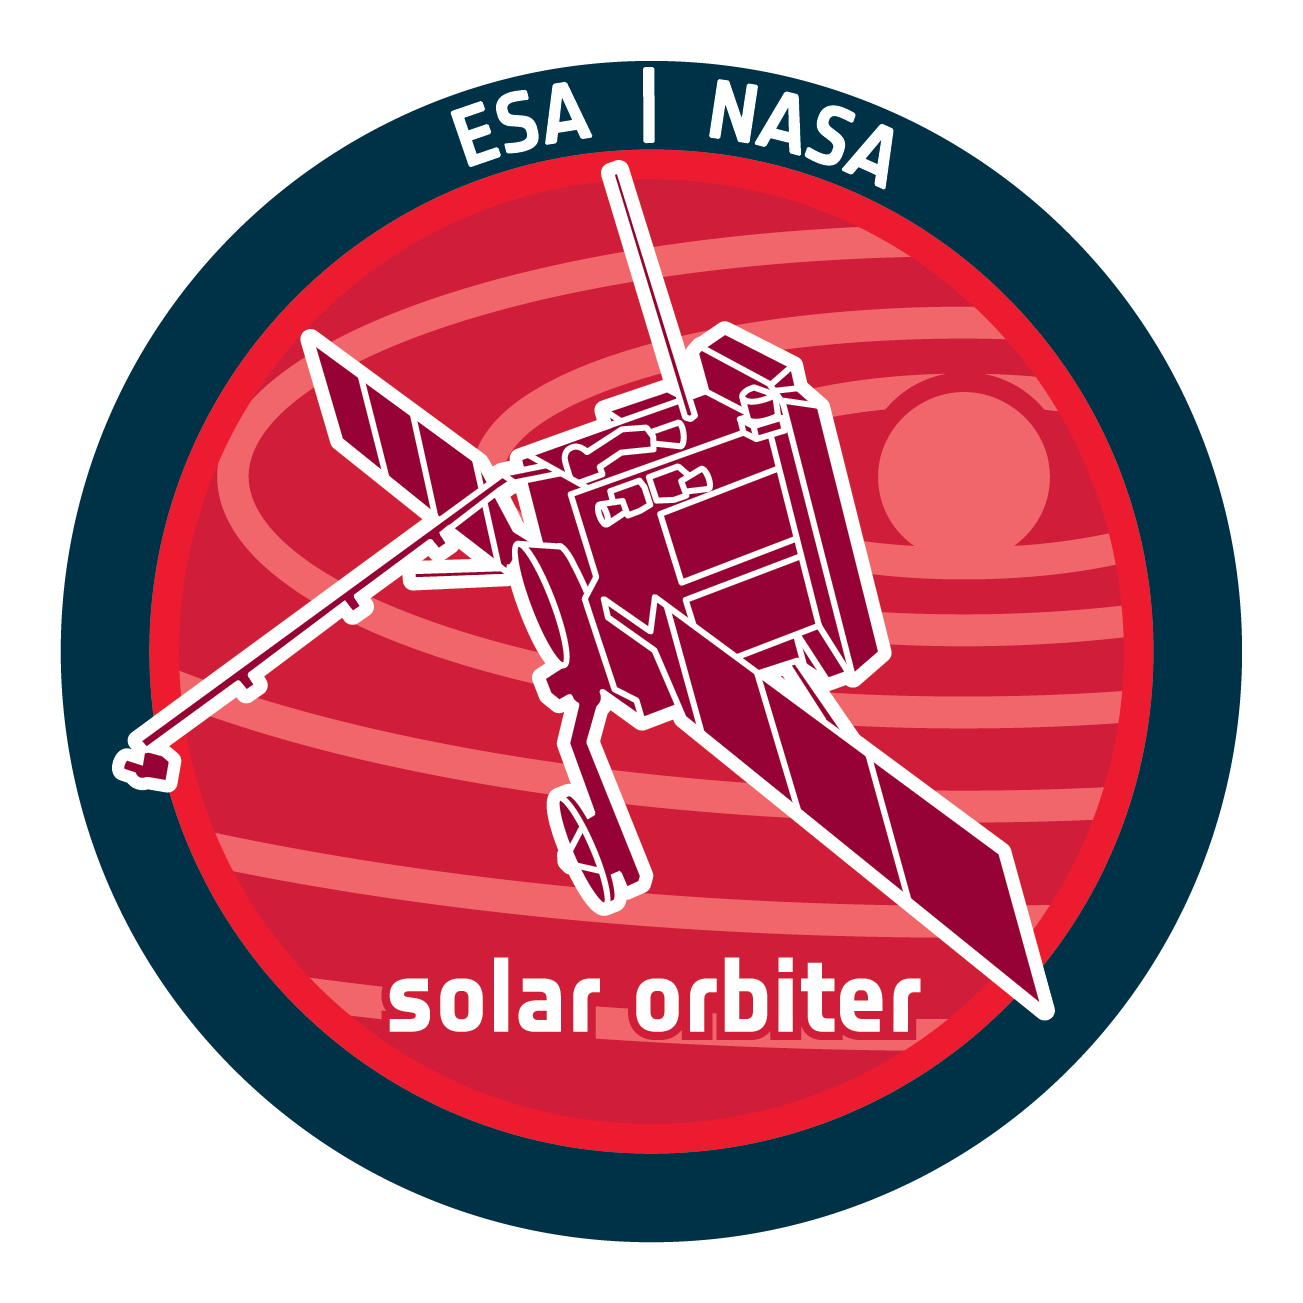 ESA NASA solar orbiter mission patch